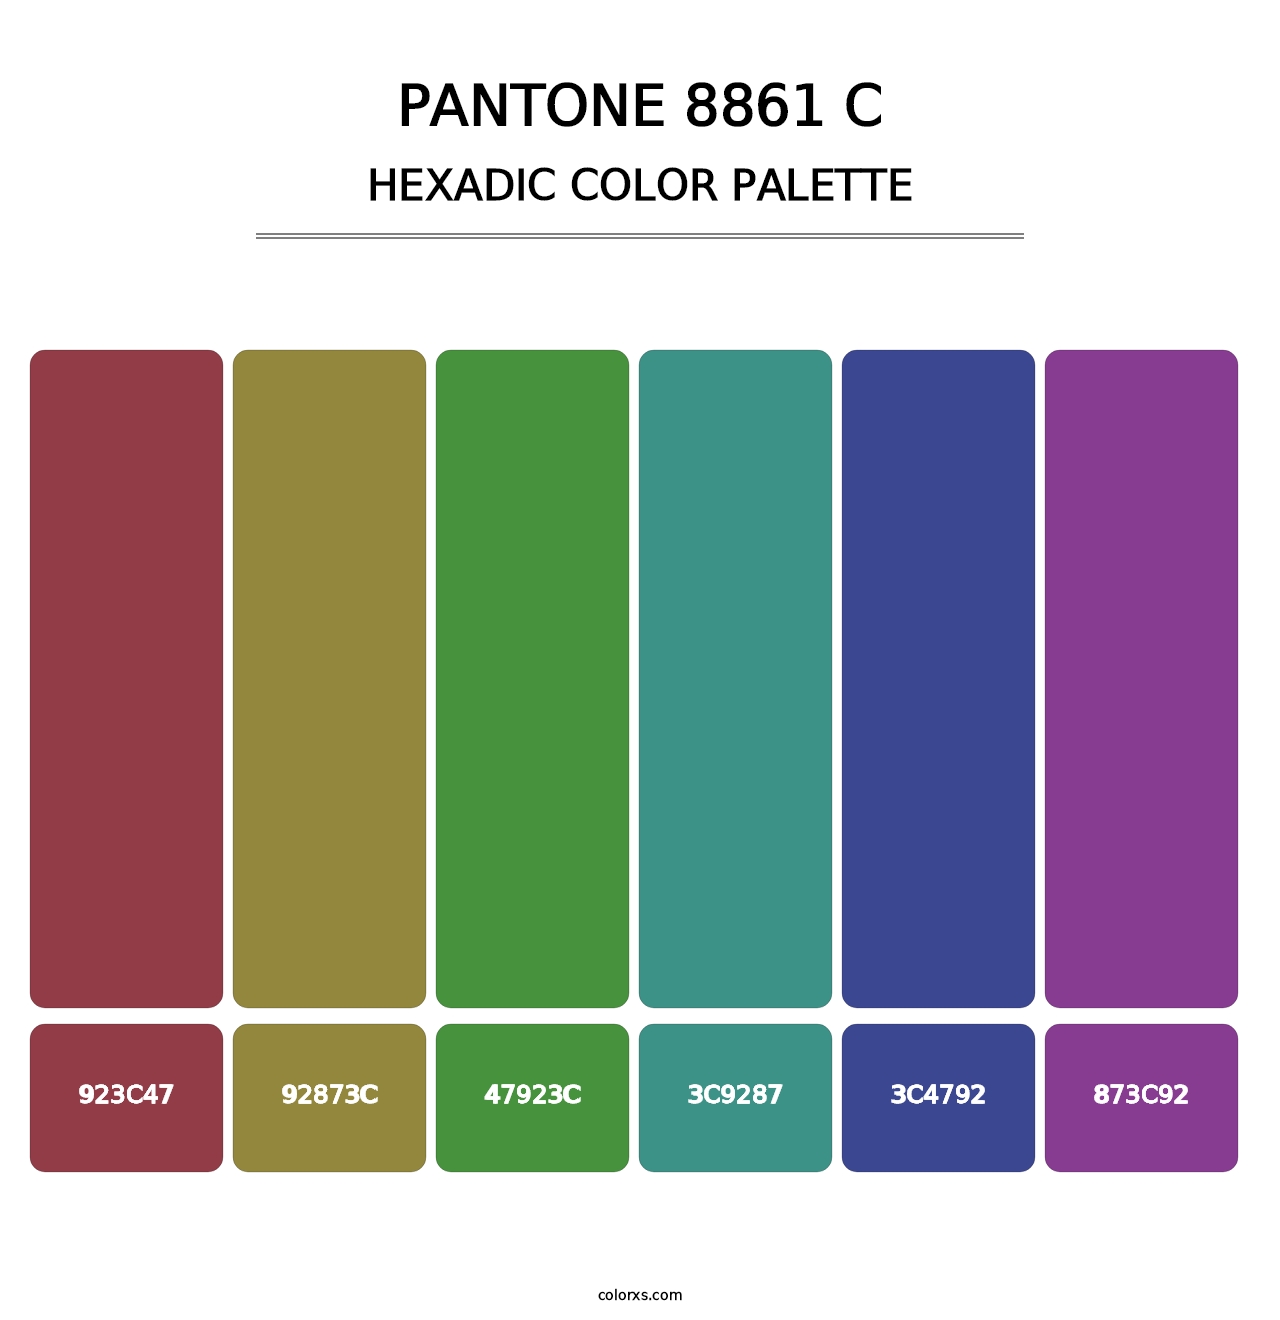 PANTONE 8861 C - Hexadic Color Palette